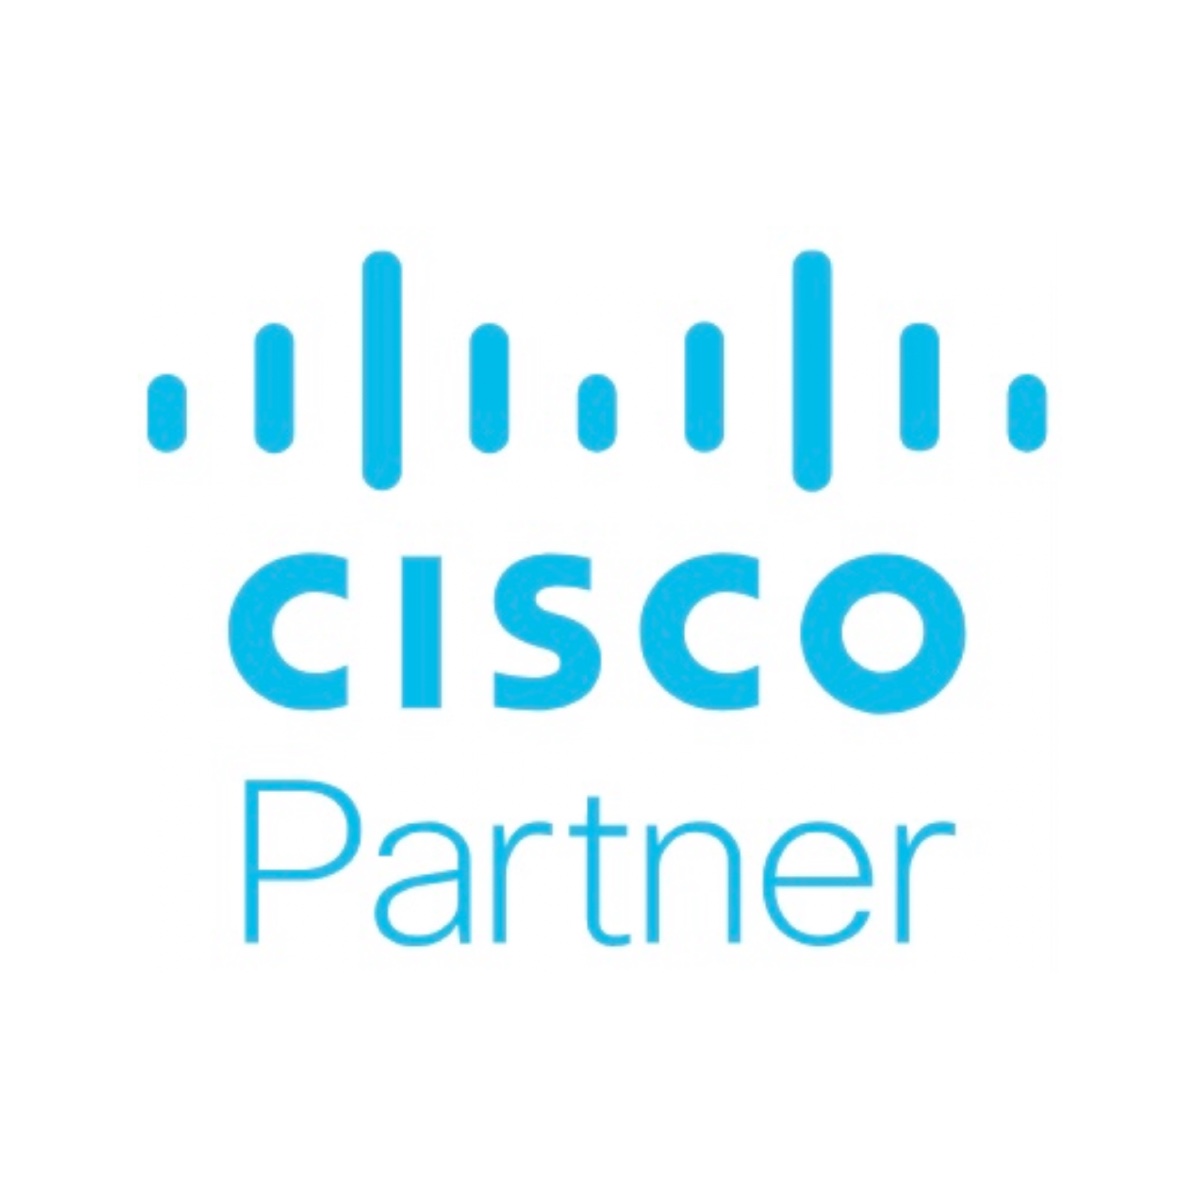 Cisco partner_logo